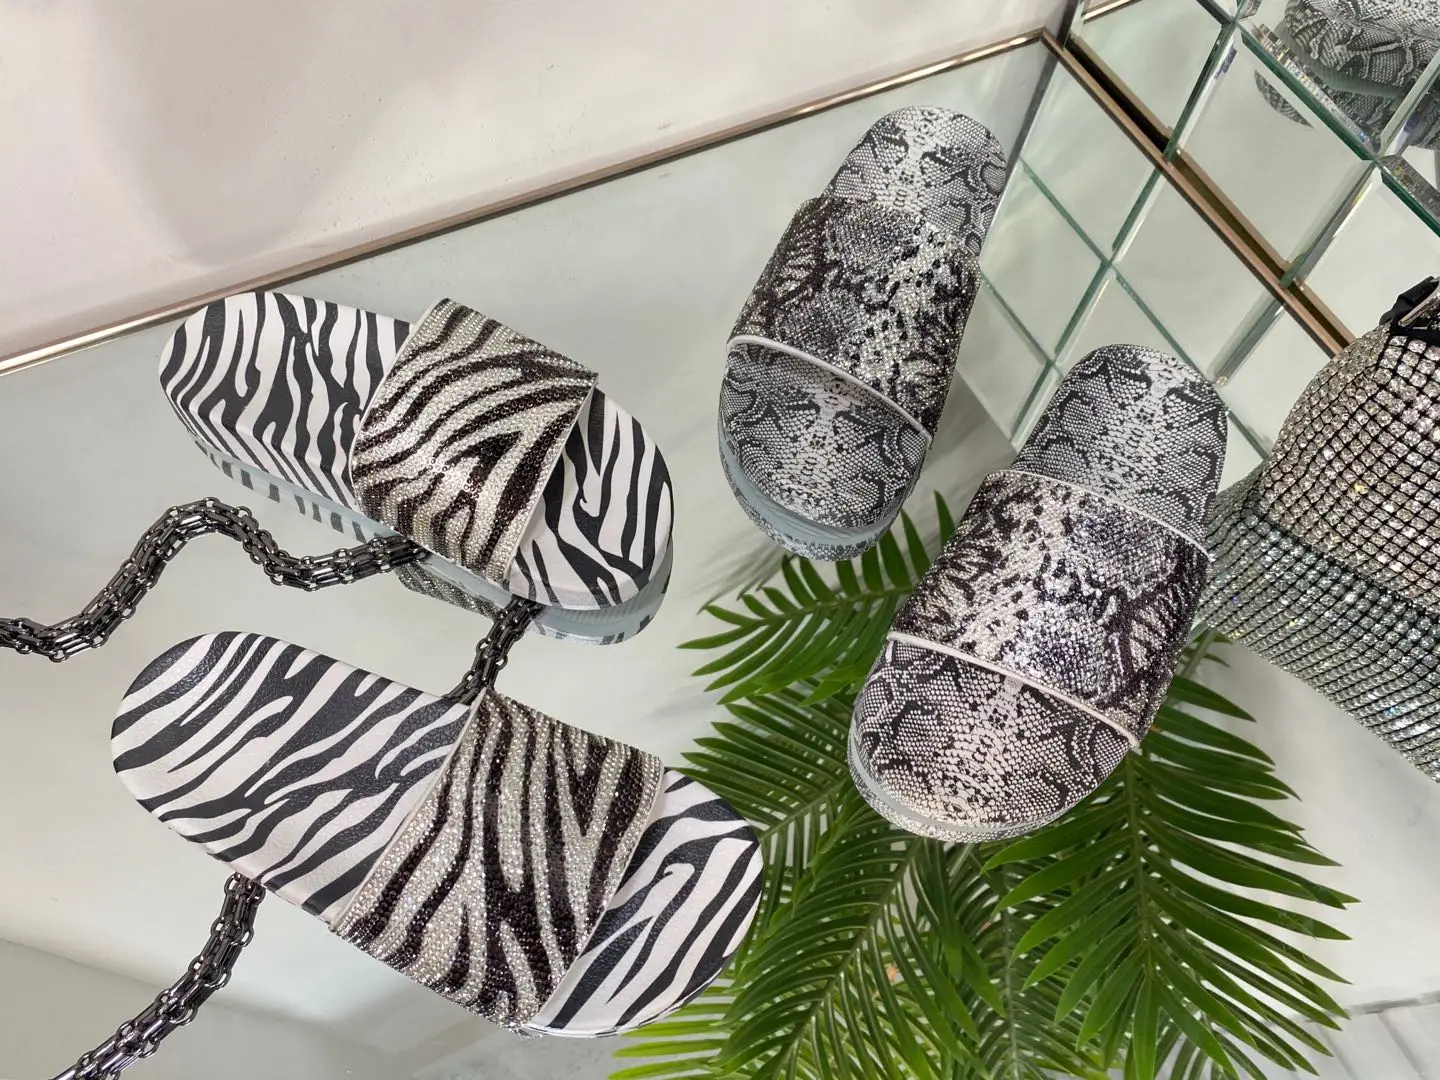 Sandals for Women Comfy Shining Diamond Flats Roman Shoes Casual Summer Beach Travel Indoor Outdoor Slipper 